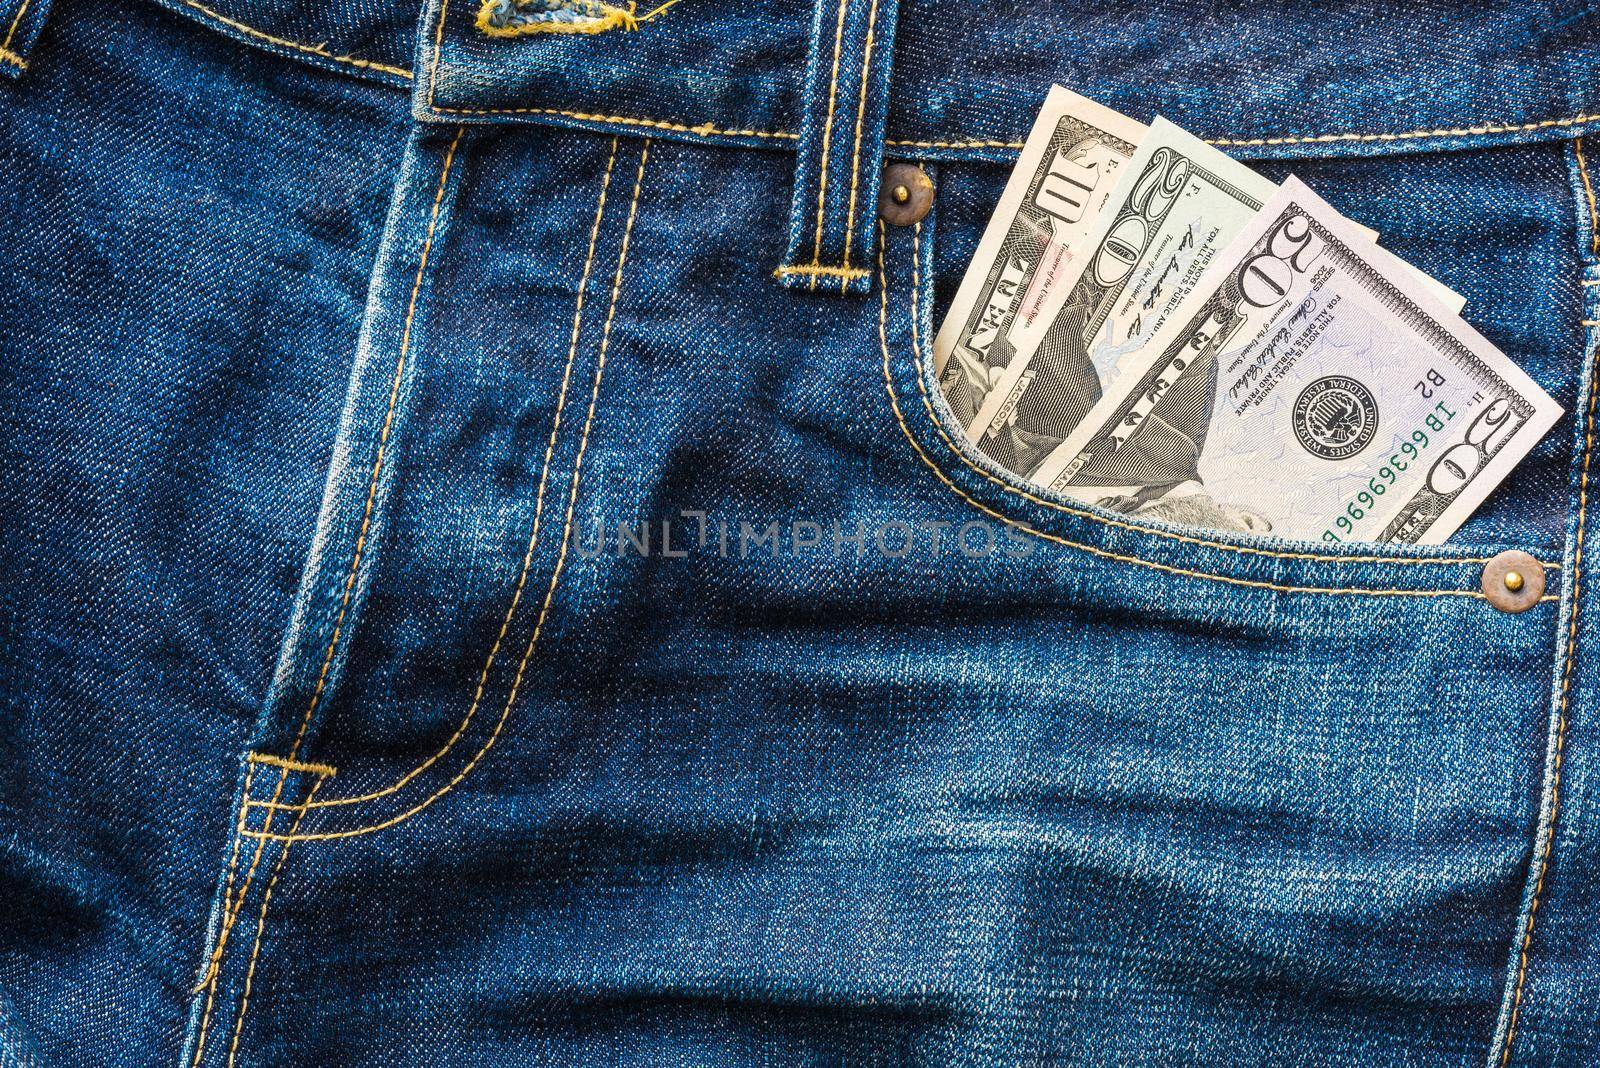 American US Dollar money in the indigo blue jeans pocket